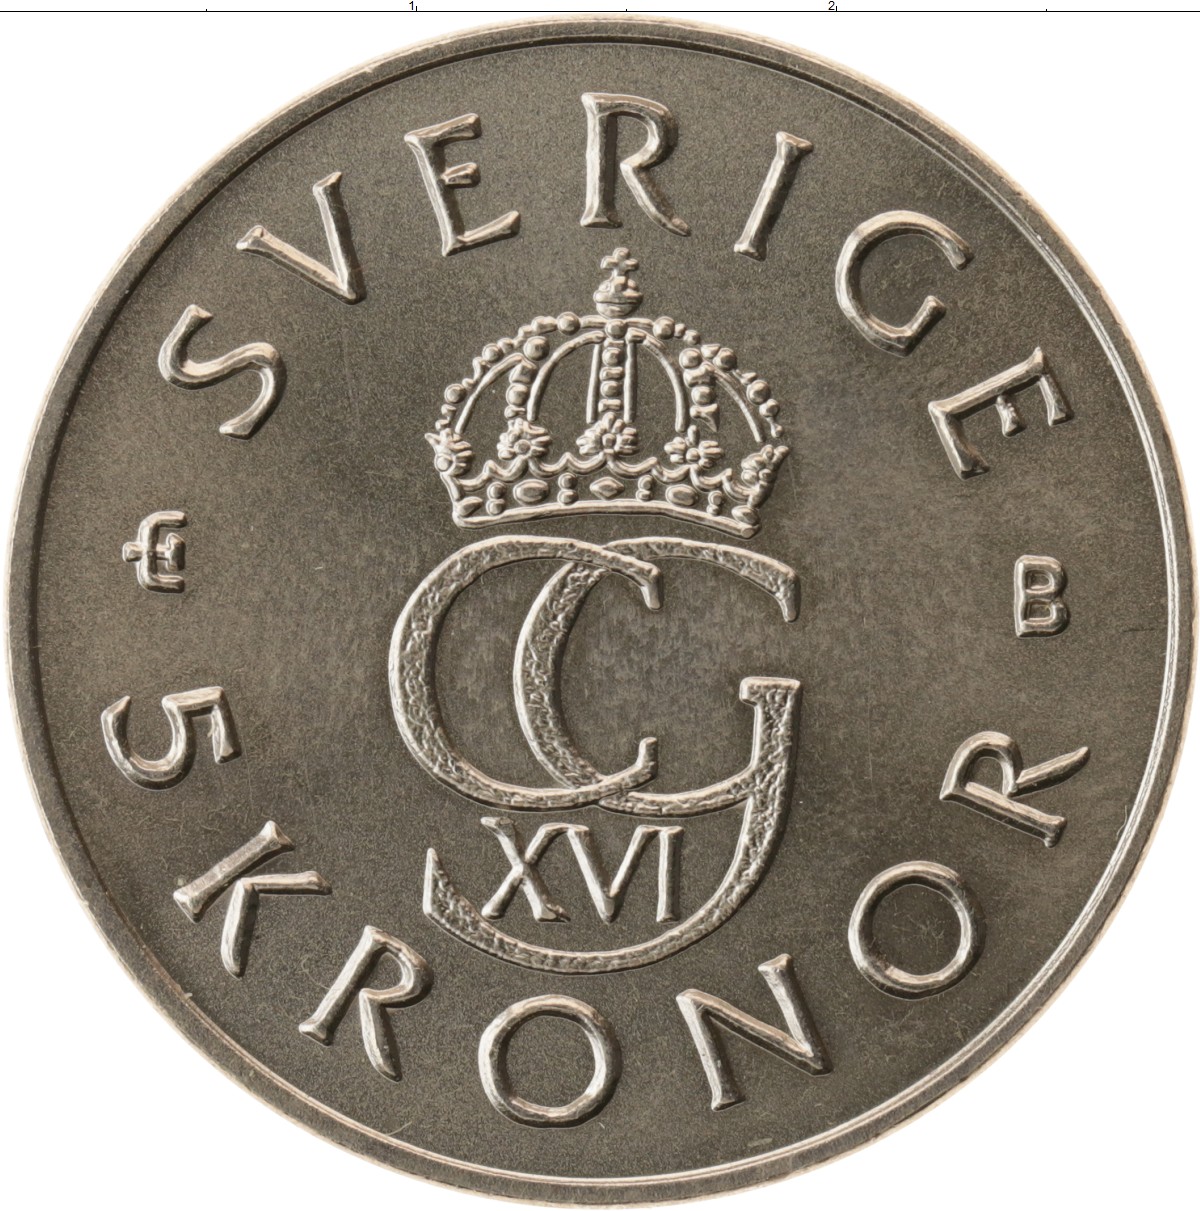 5 кронов в рублях. Шведская крона монета. 5 Шведских крон. Монеты Швеции 20 крон 1995 года.